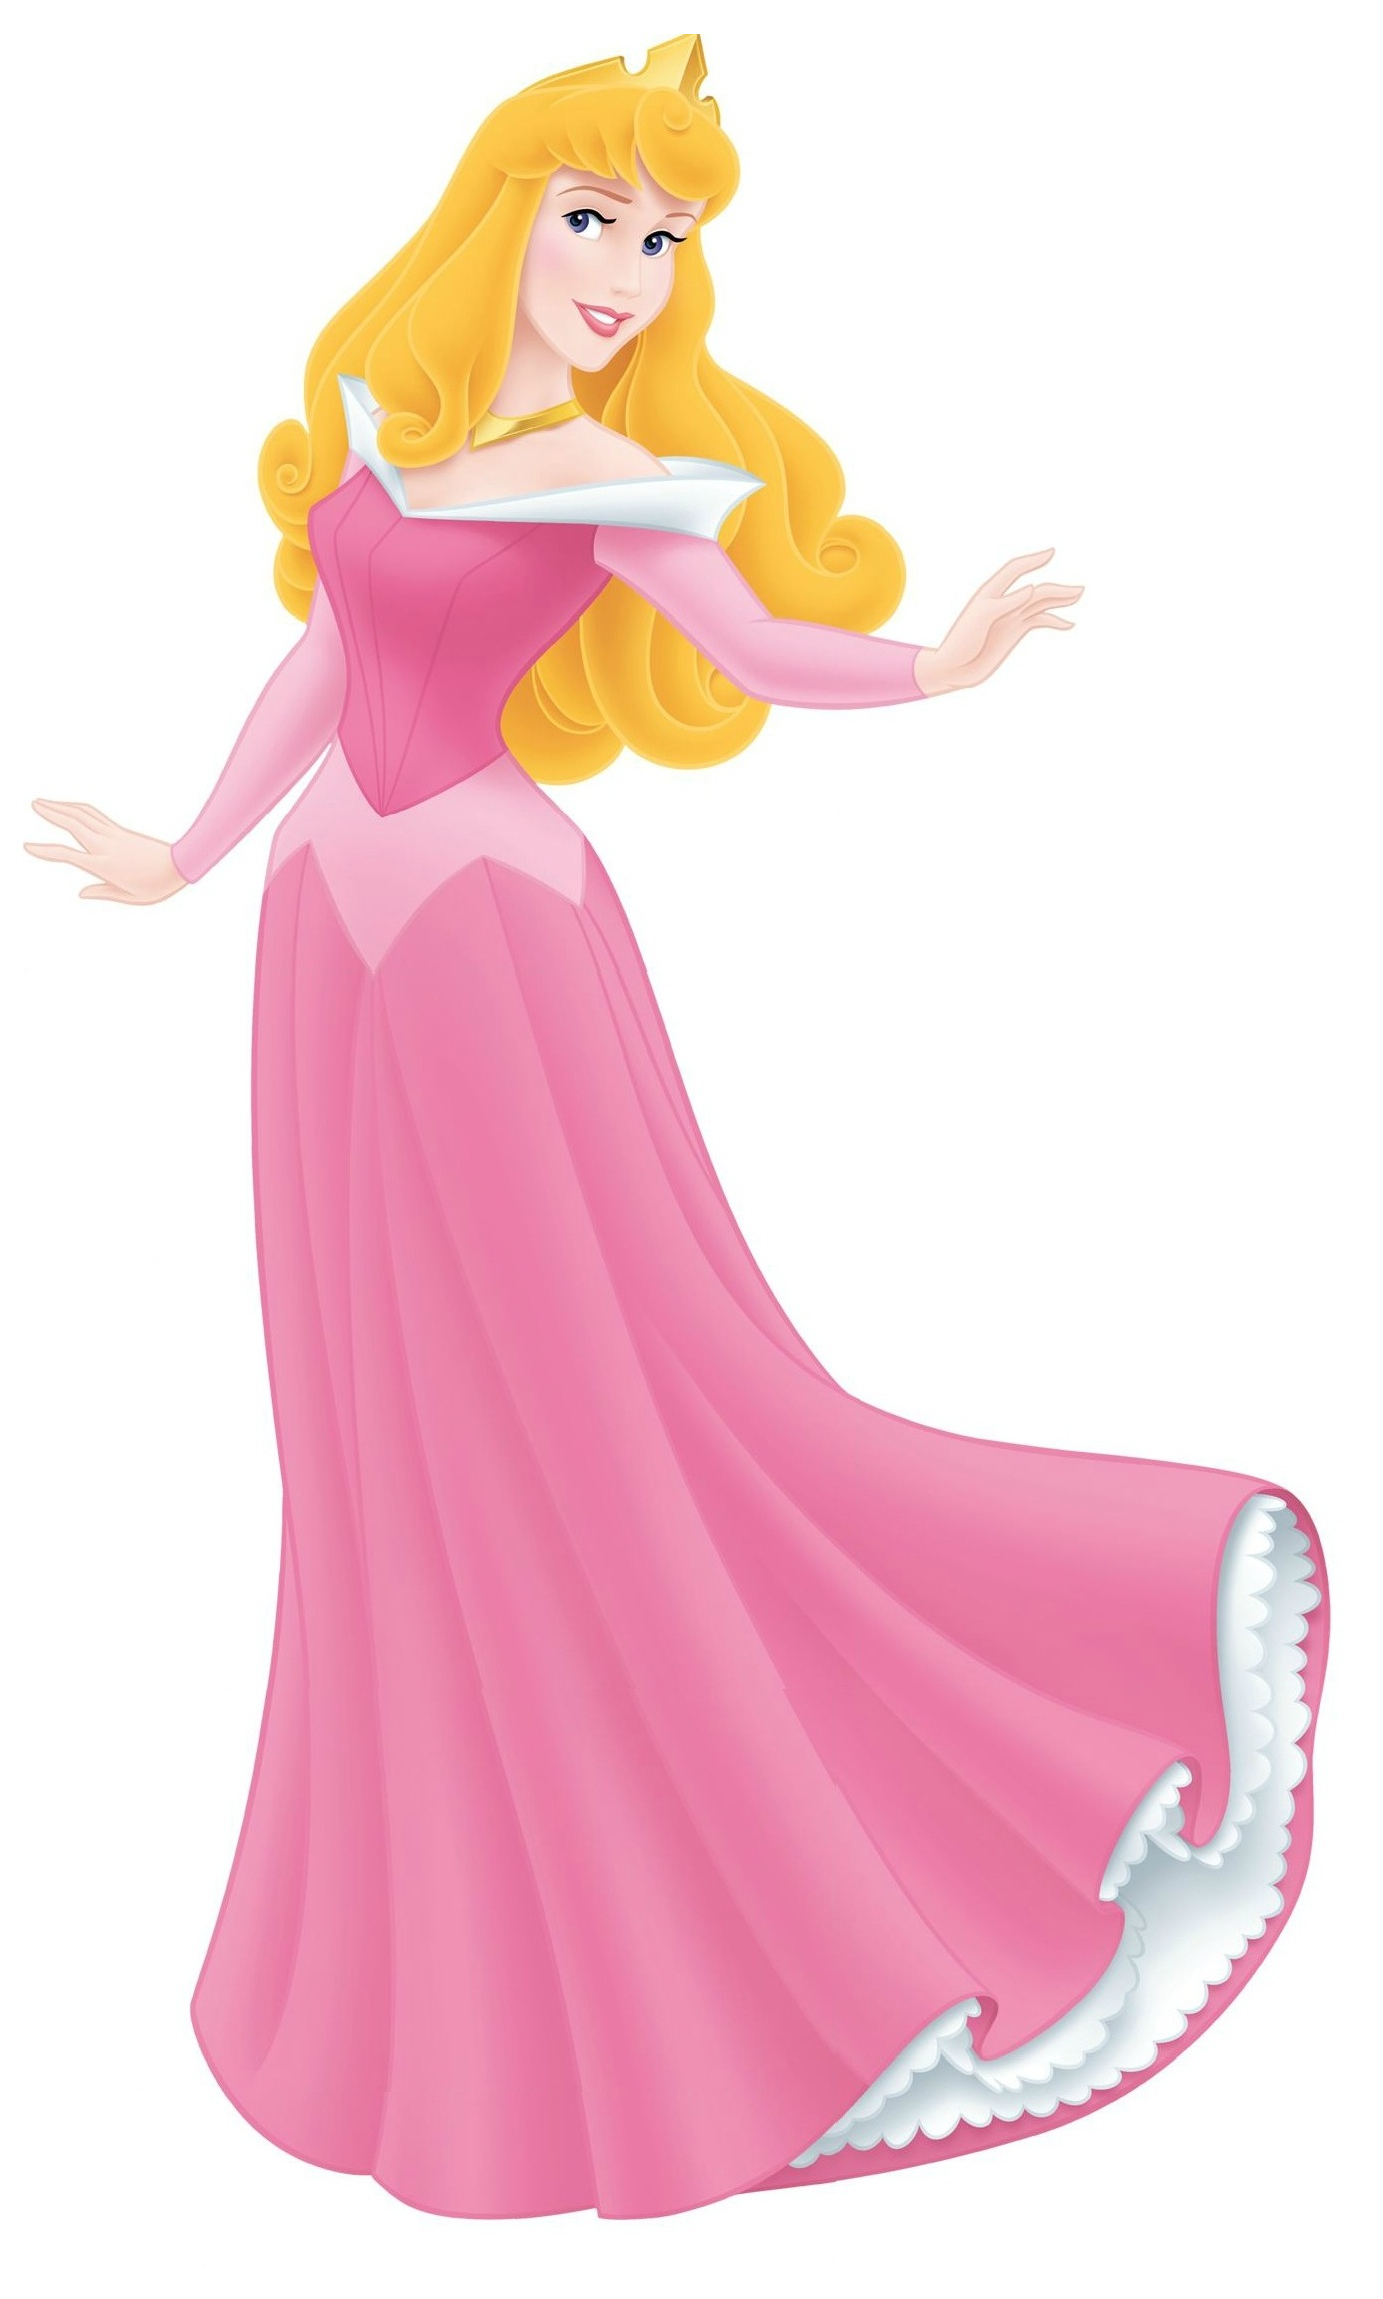 Disney princess aurora clipart 